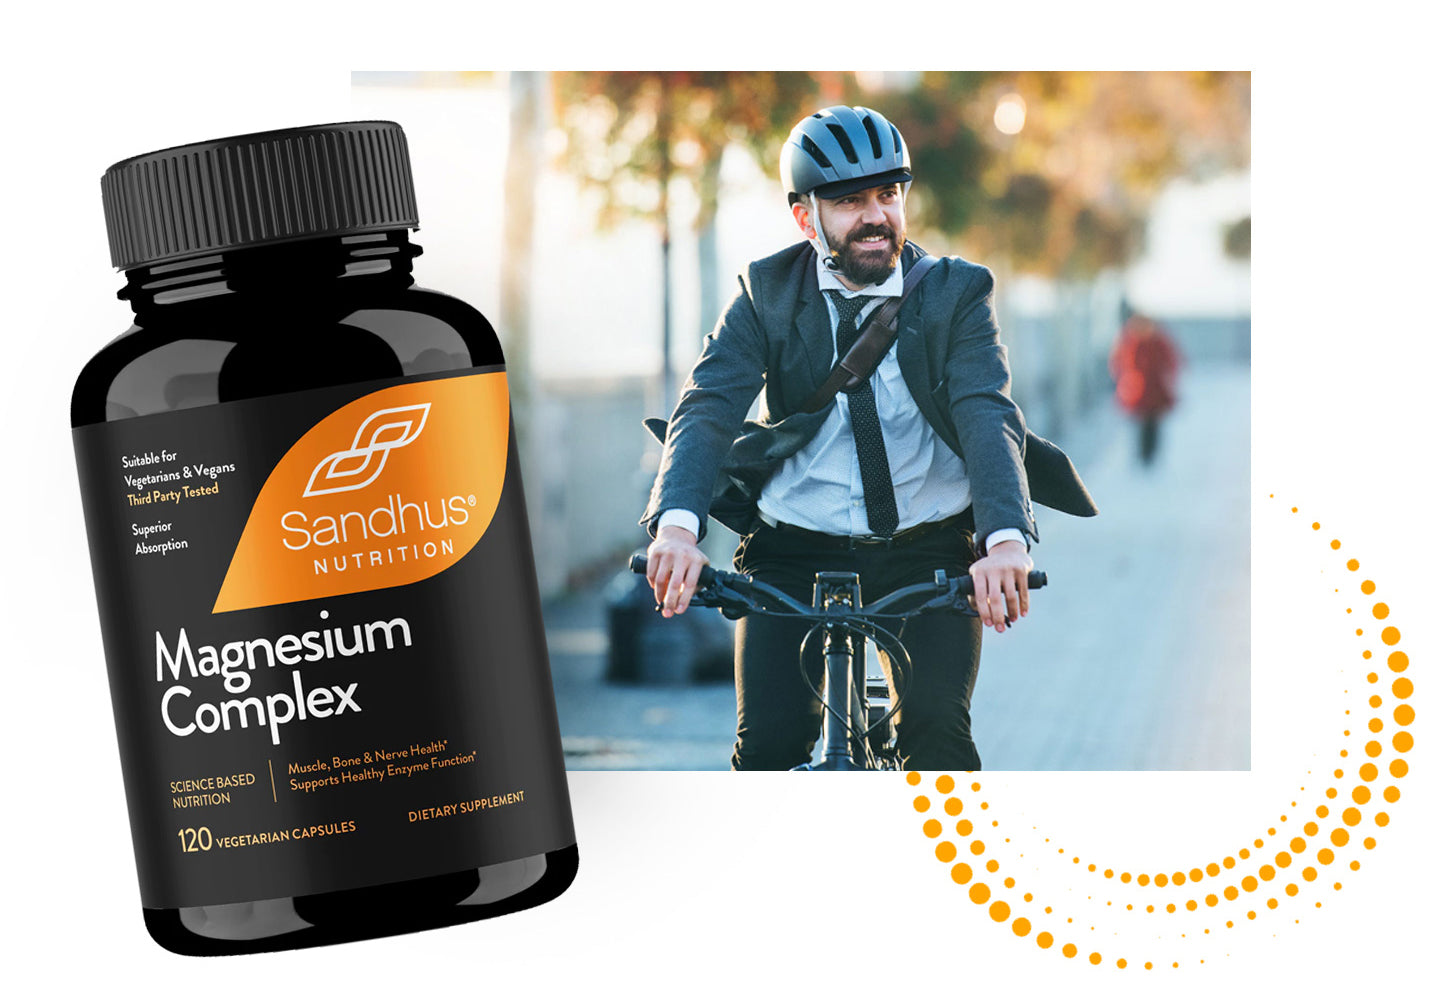 magnesium-complex-supplement-bottle